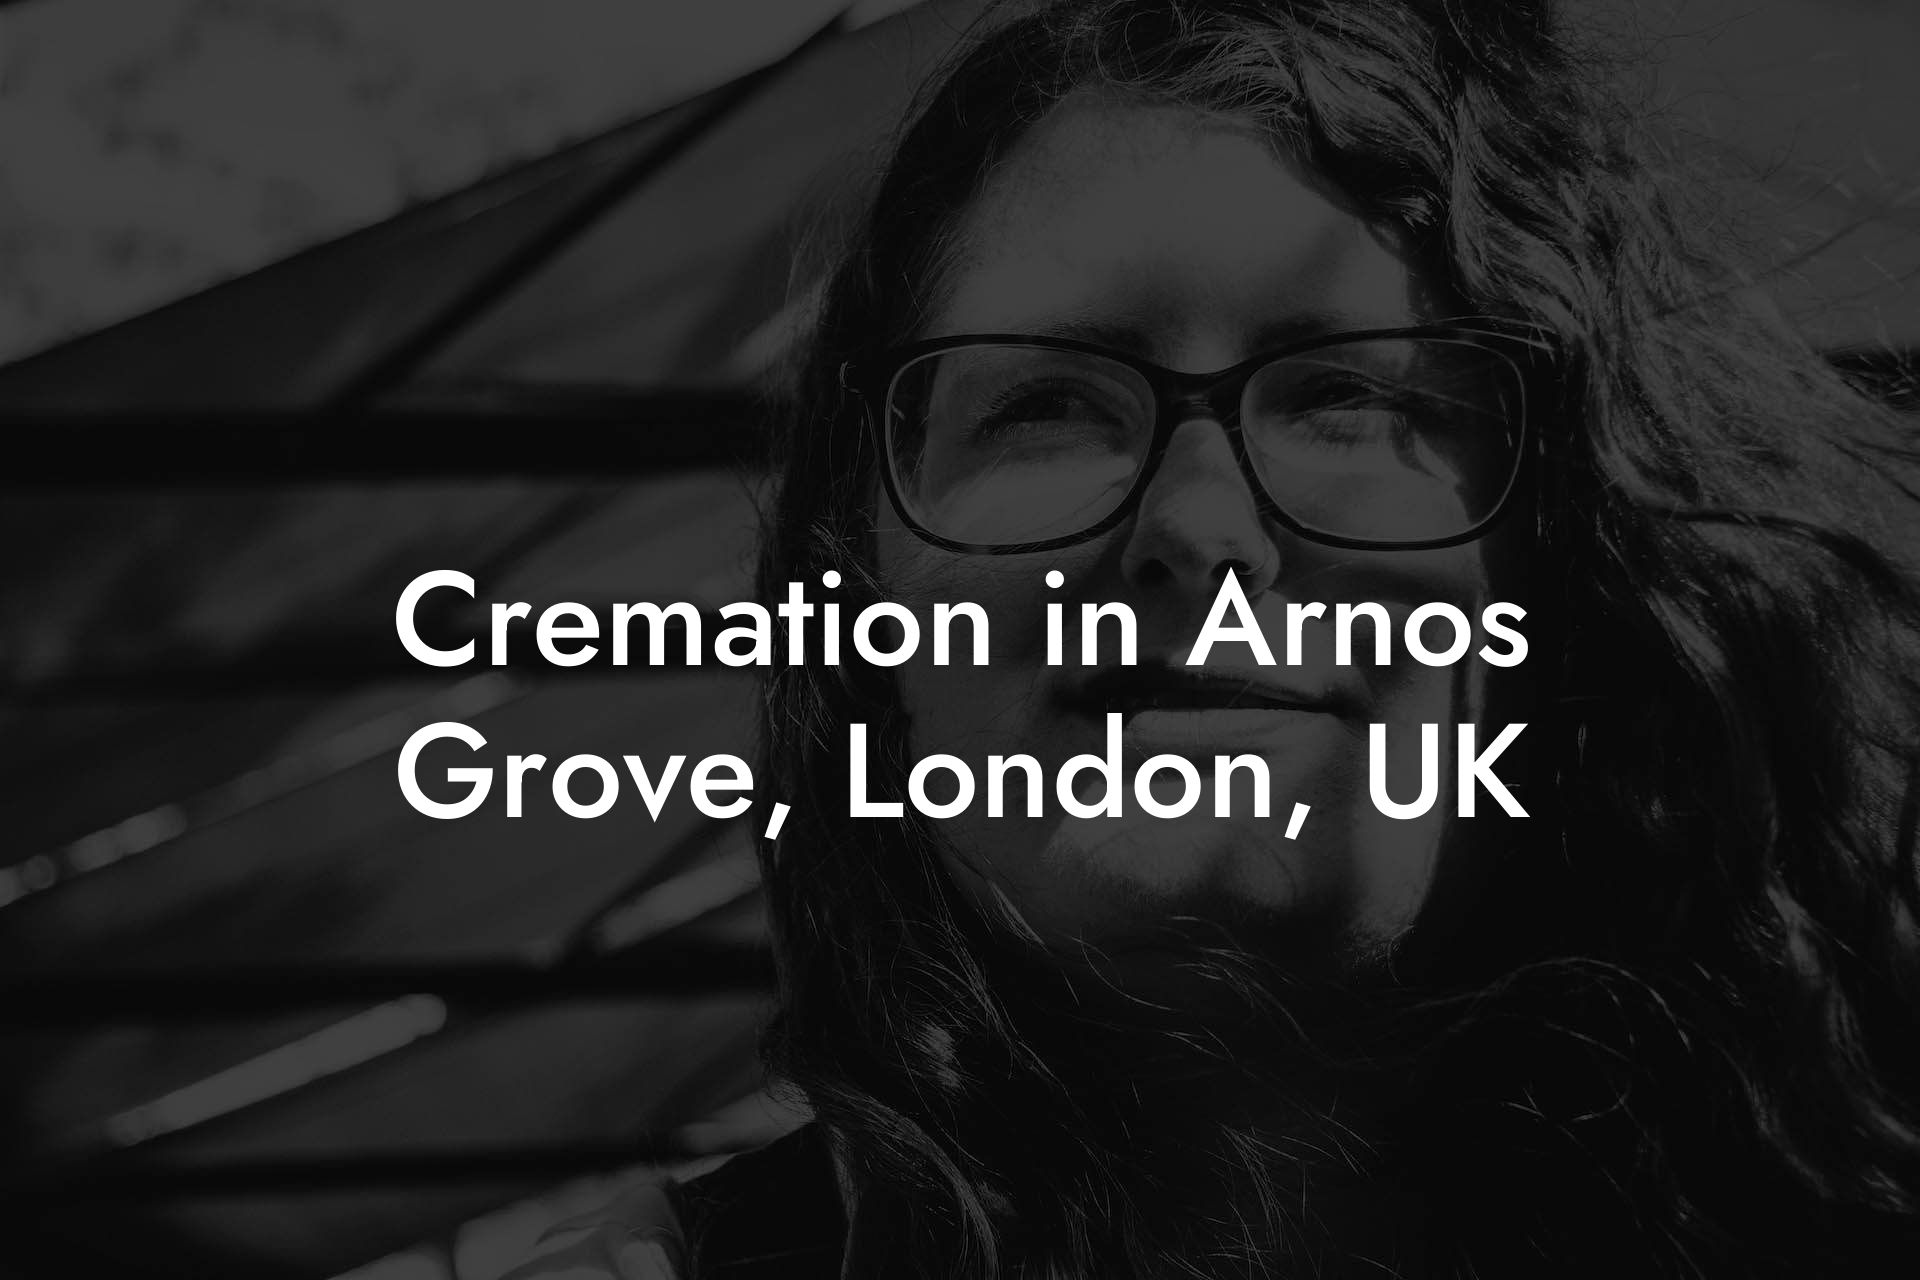 Cremation in Arnos Grove, London, UK